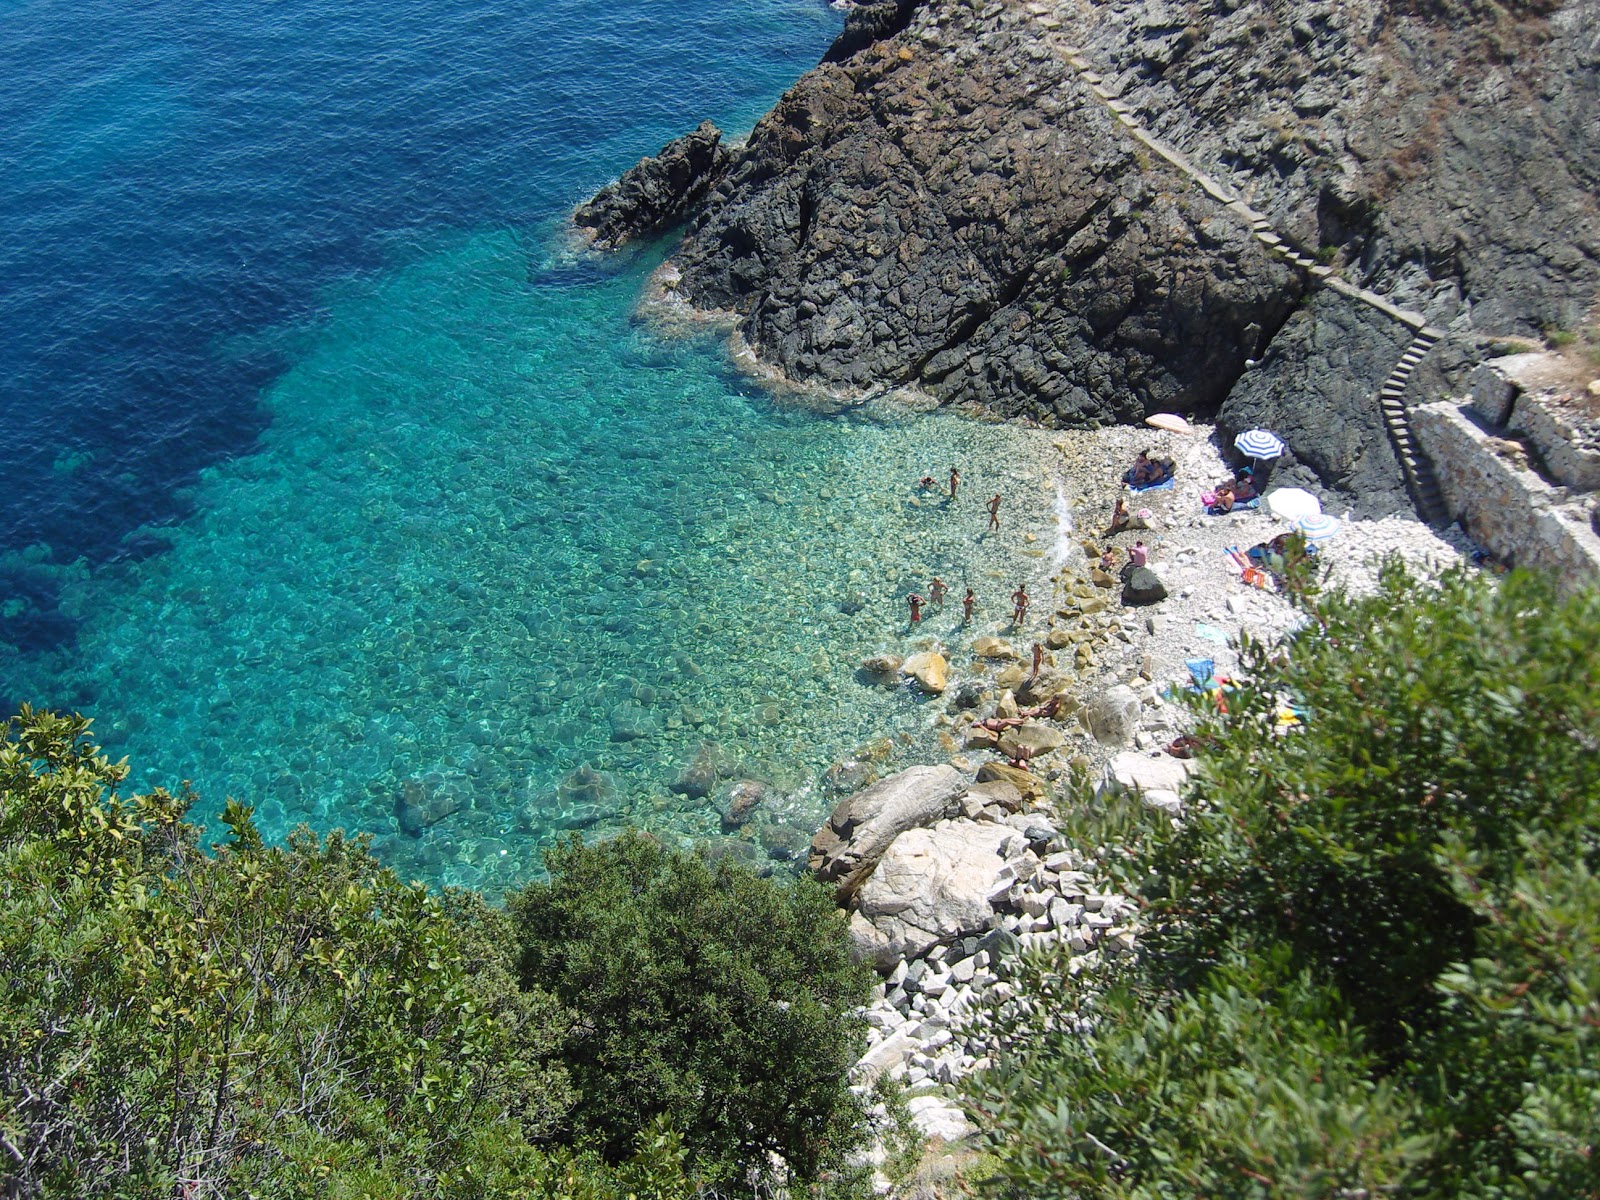 Spiaggia della Crocetta'in fotoğrafı küçük koy ile birlikte